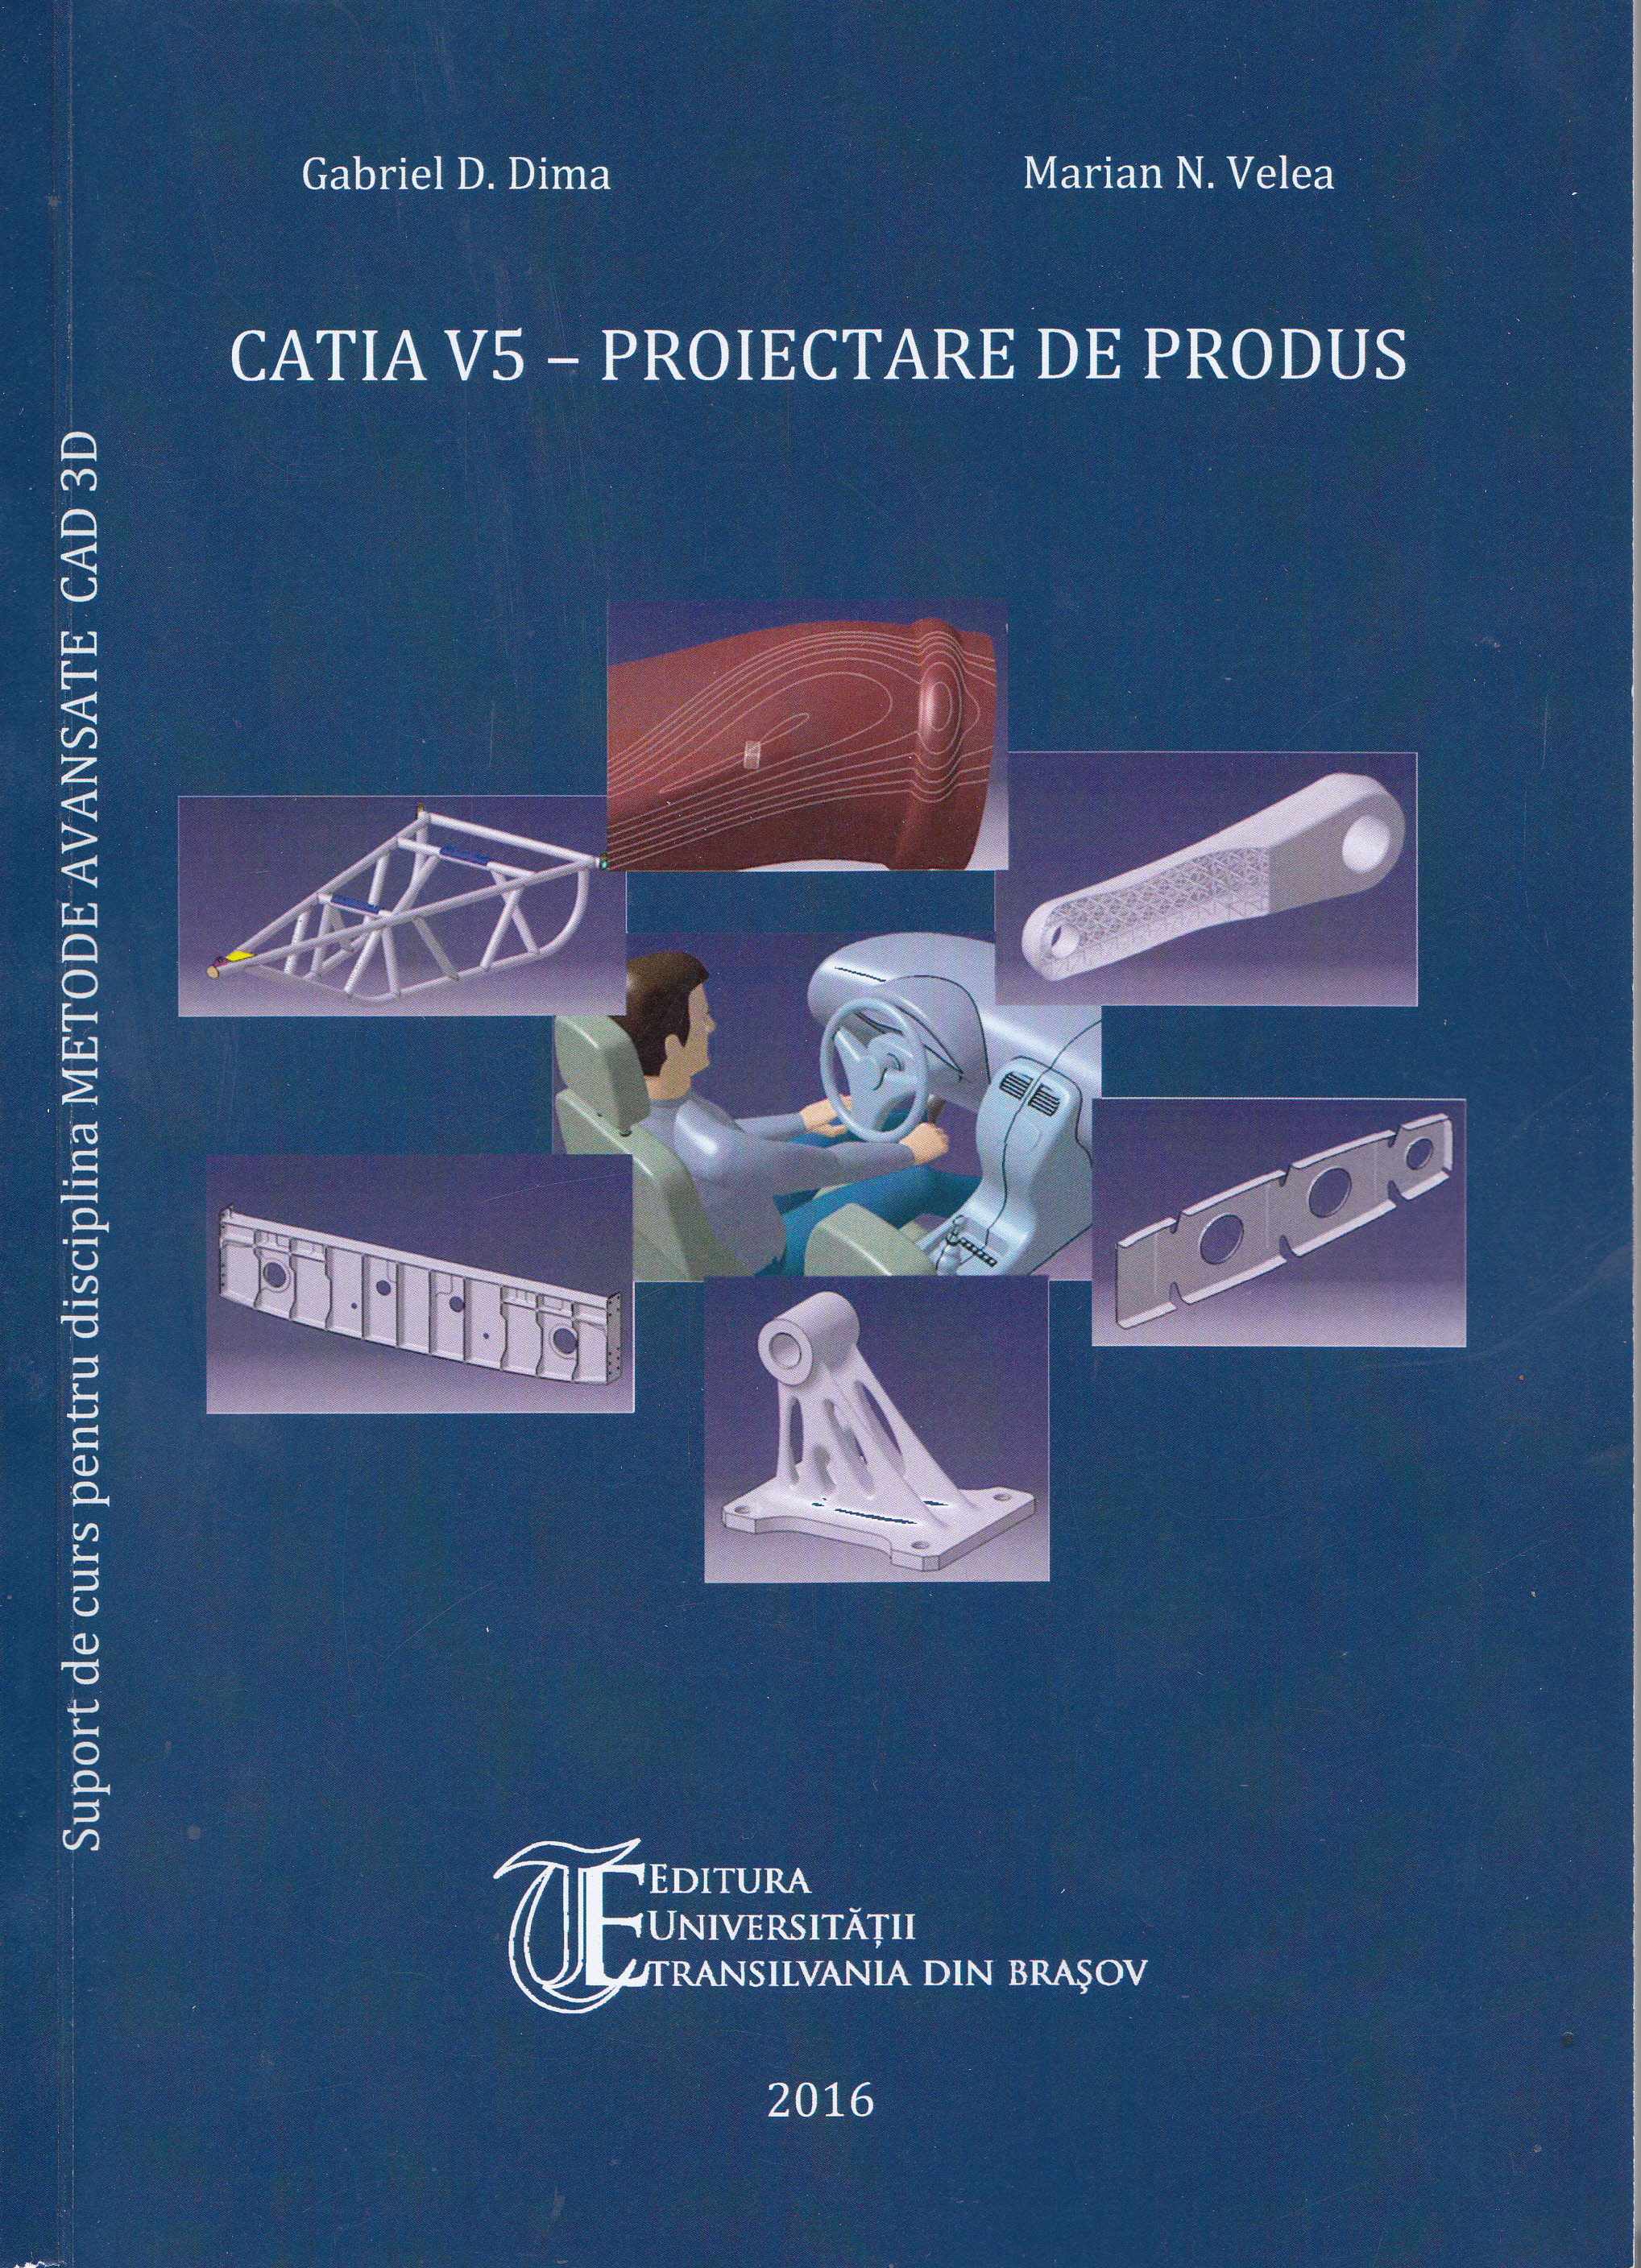 Catia V5 - Proiectare de produs - Gabriel D. Dima, Marian N. Velea